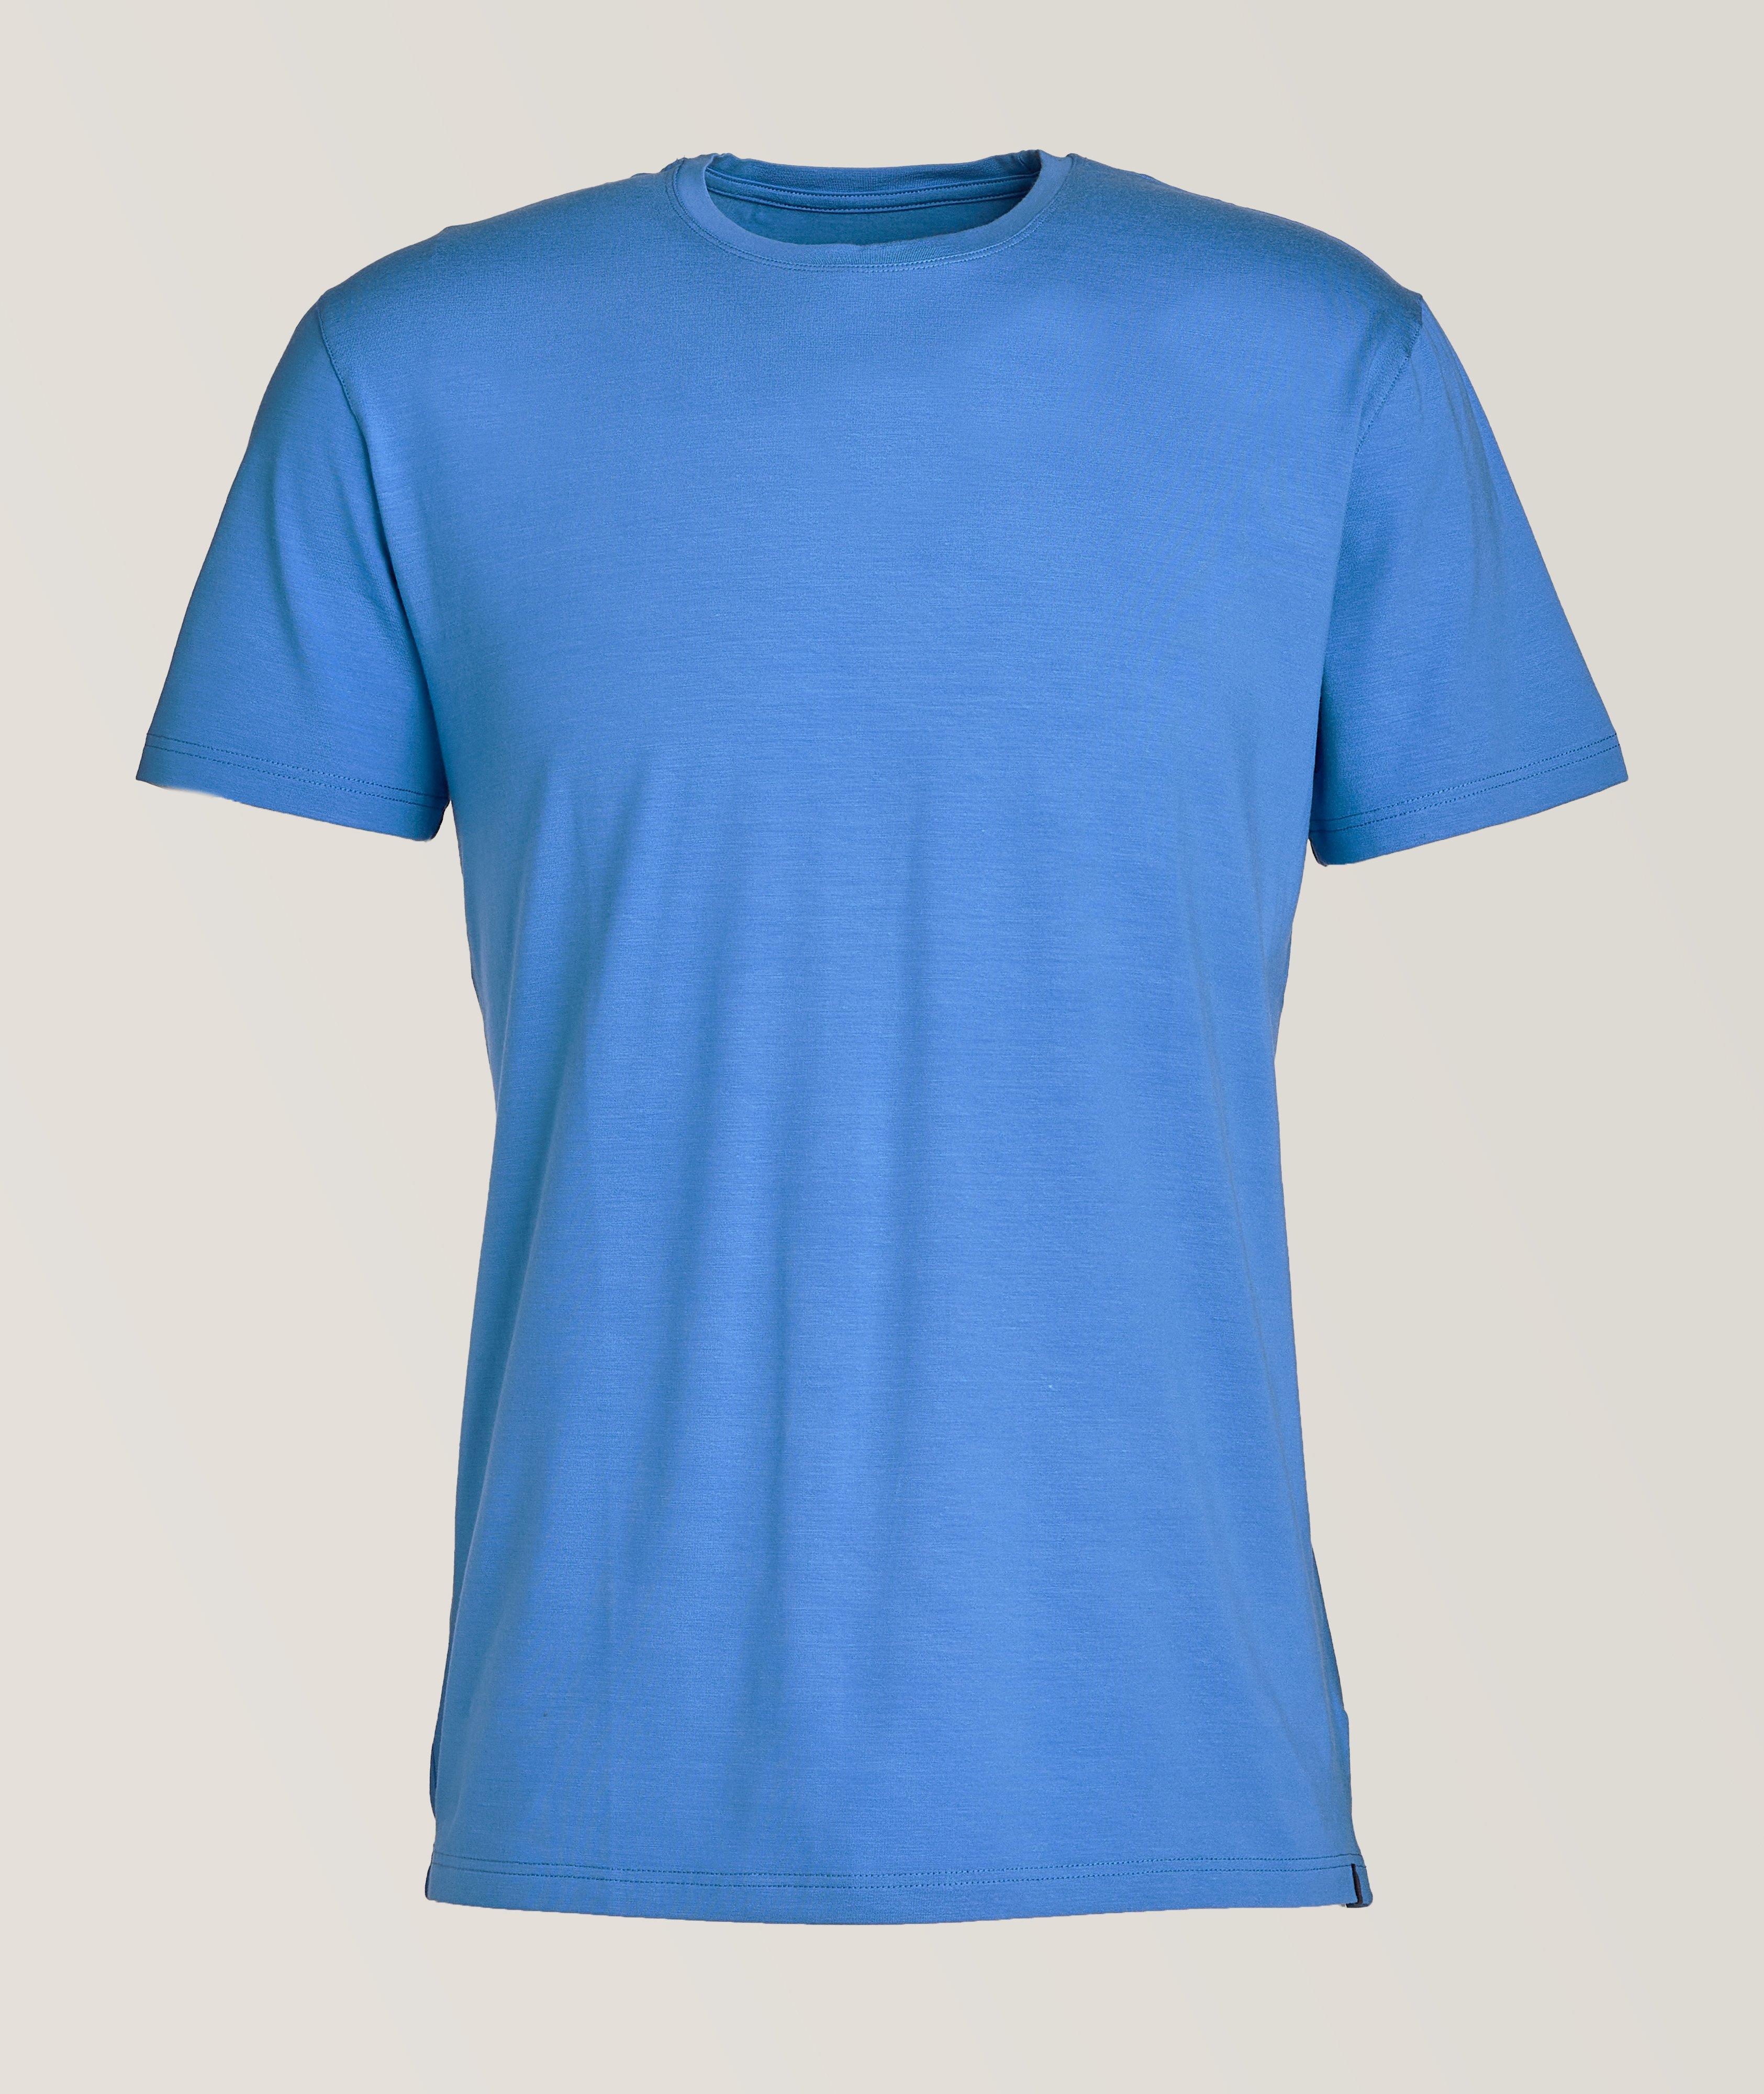 Basel Micro Modal T-Shirt image 0